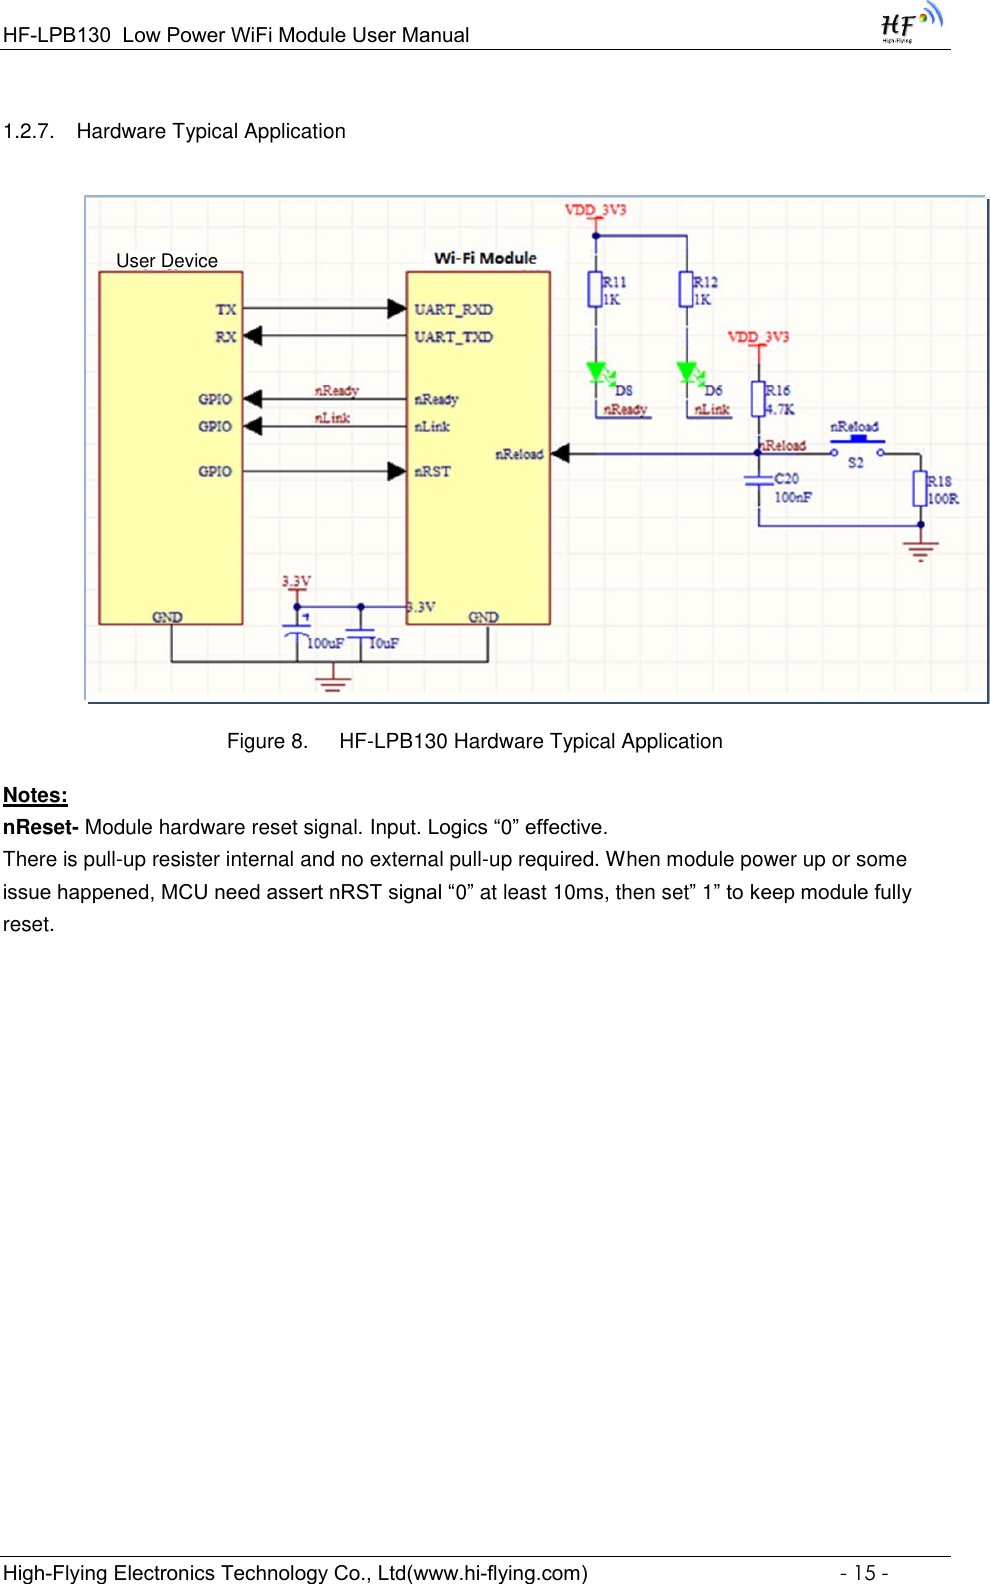 Page 15 of High Flying Electronics Technology HF-LPB130 Wi-Fi Module User Manual GPON SFU System Design